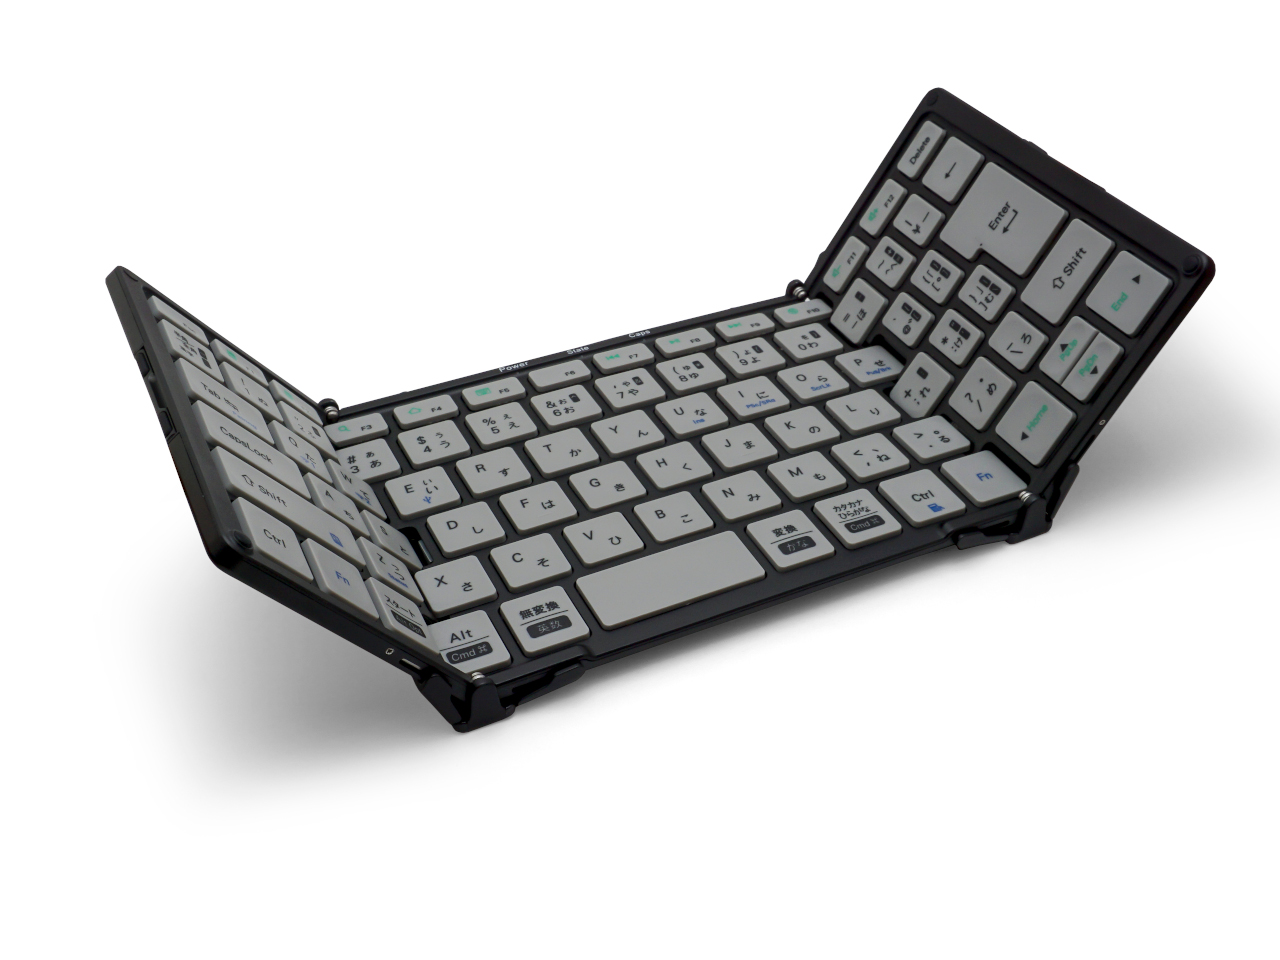 MOBO Keyboard 2 (ブラック/グレー)